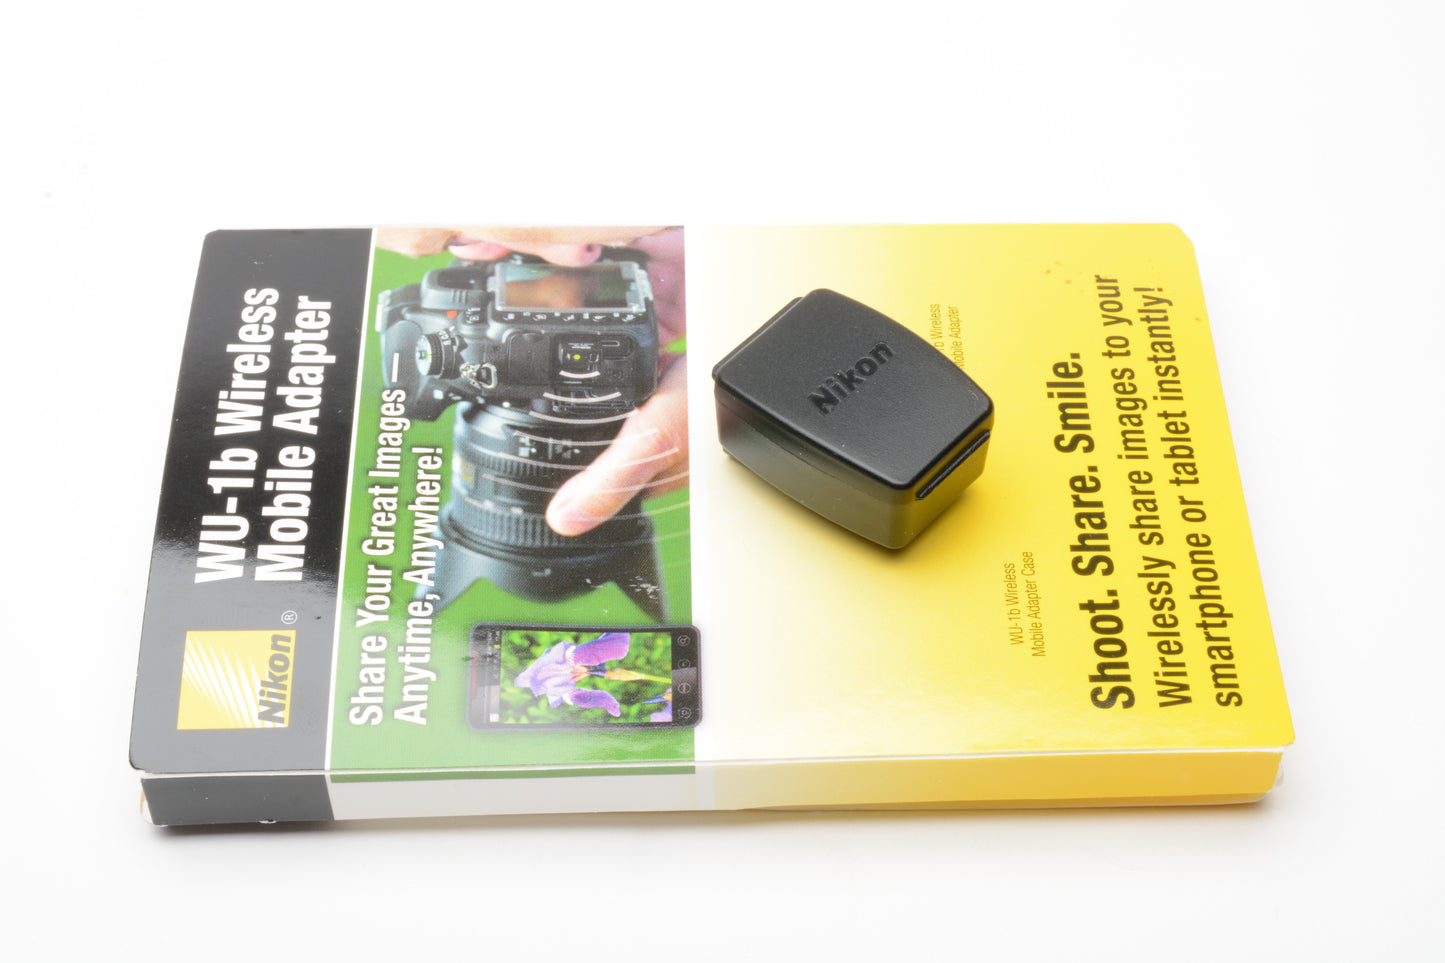 Nikon WU-1b wireless adapter w/case, instructions, New - never used